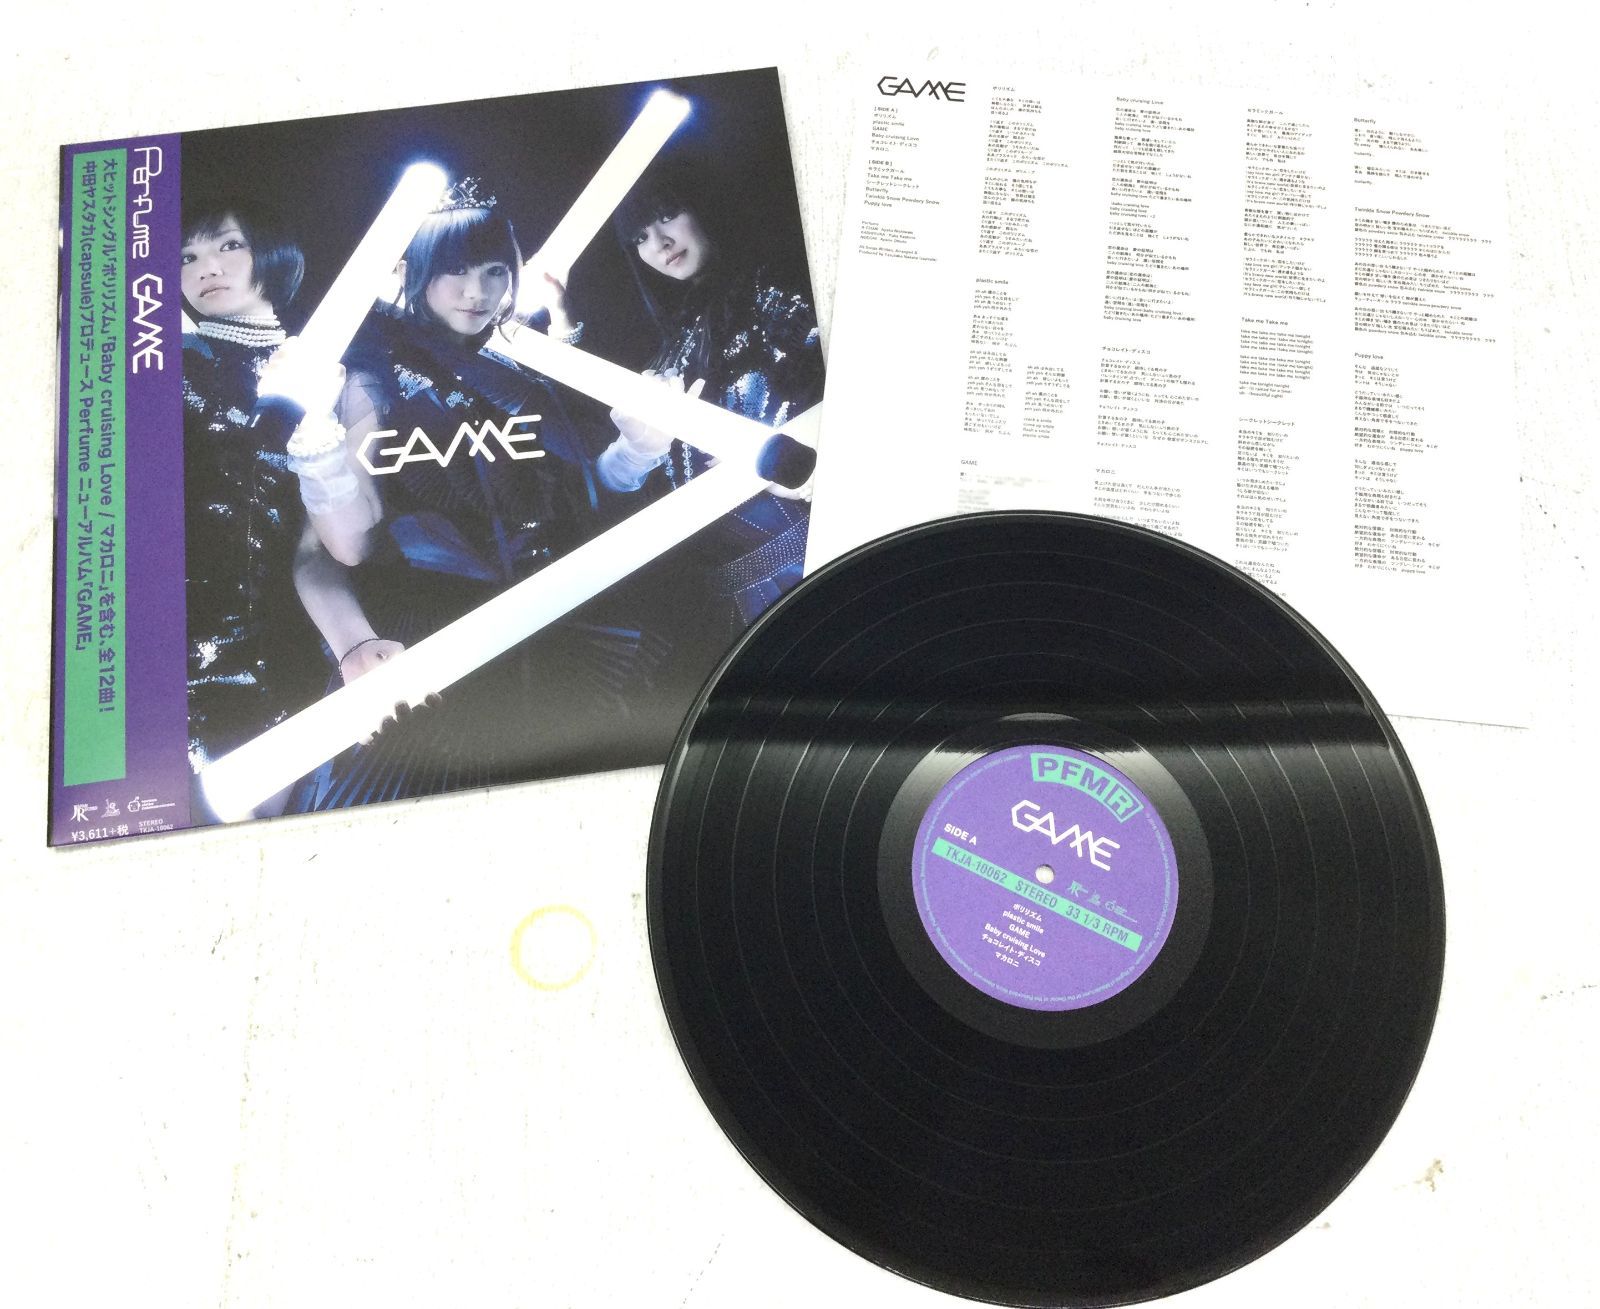 C0114】Perfume Complete LP BOX パフューム アナログ盤 レコード 完全